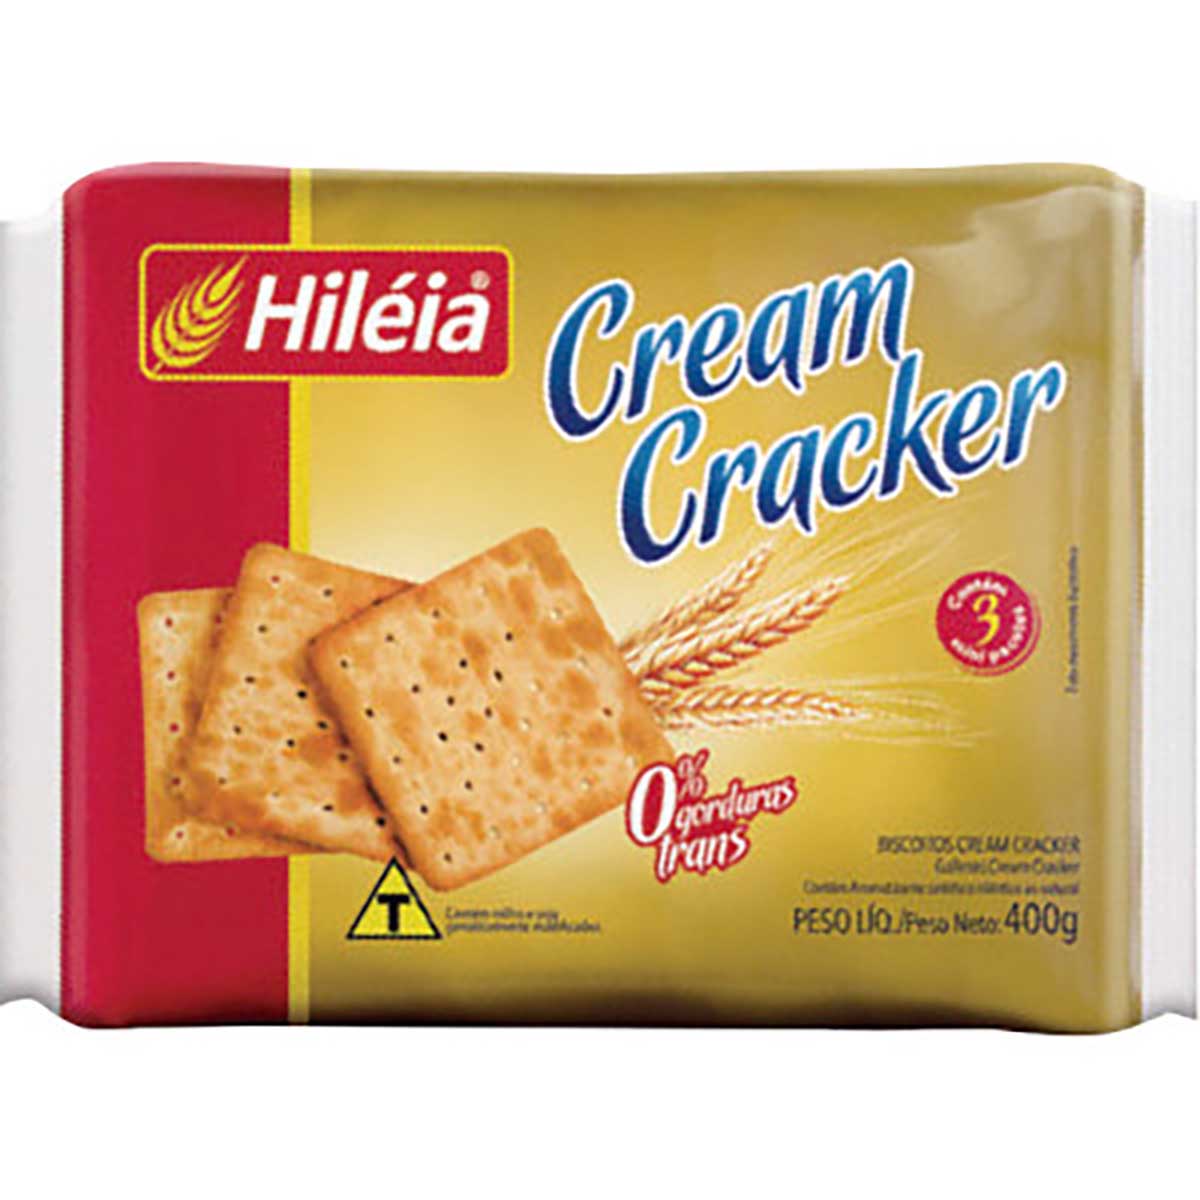 bisc-cream-cracker-hileia-400g-1.jpg